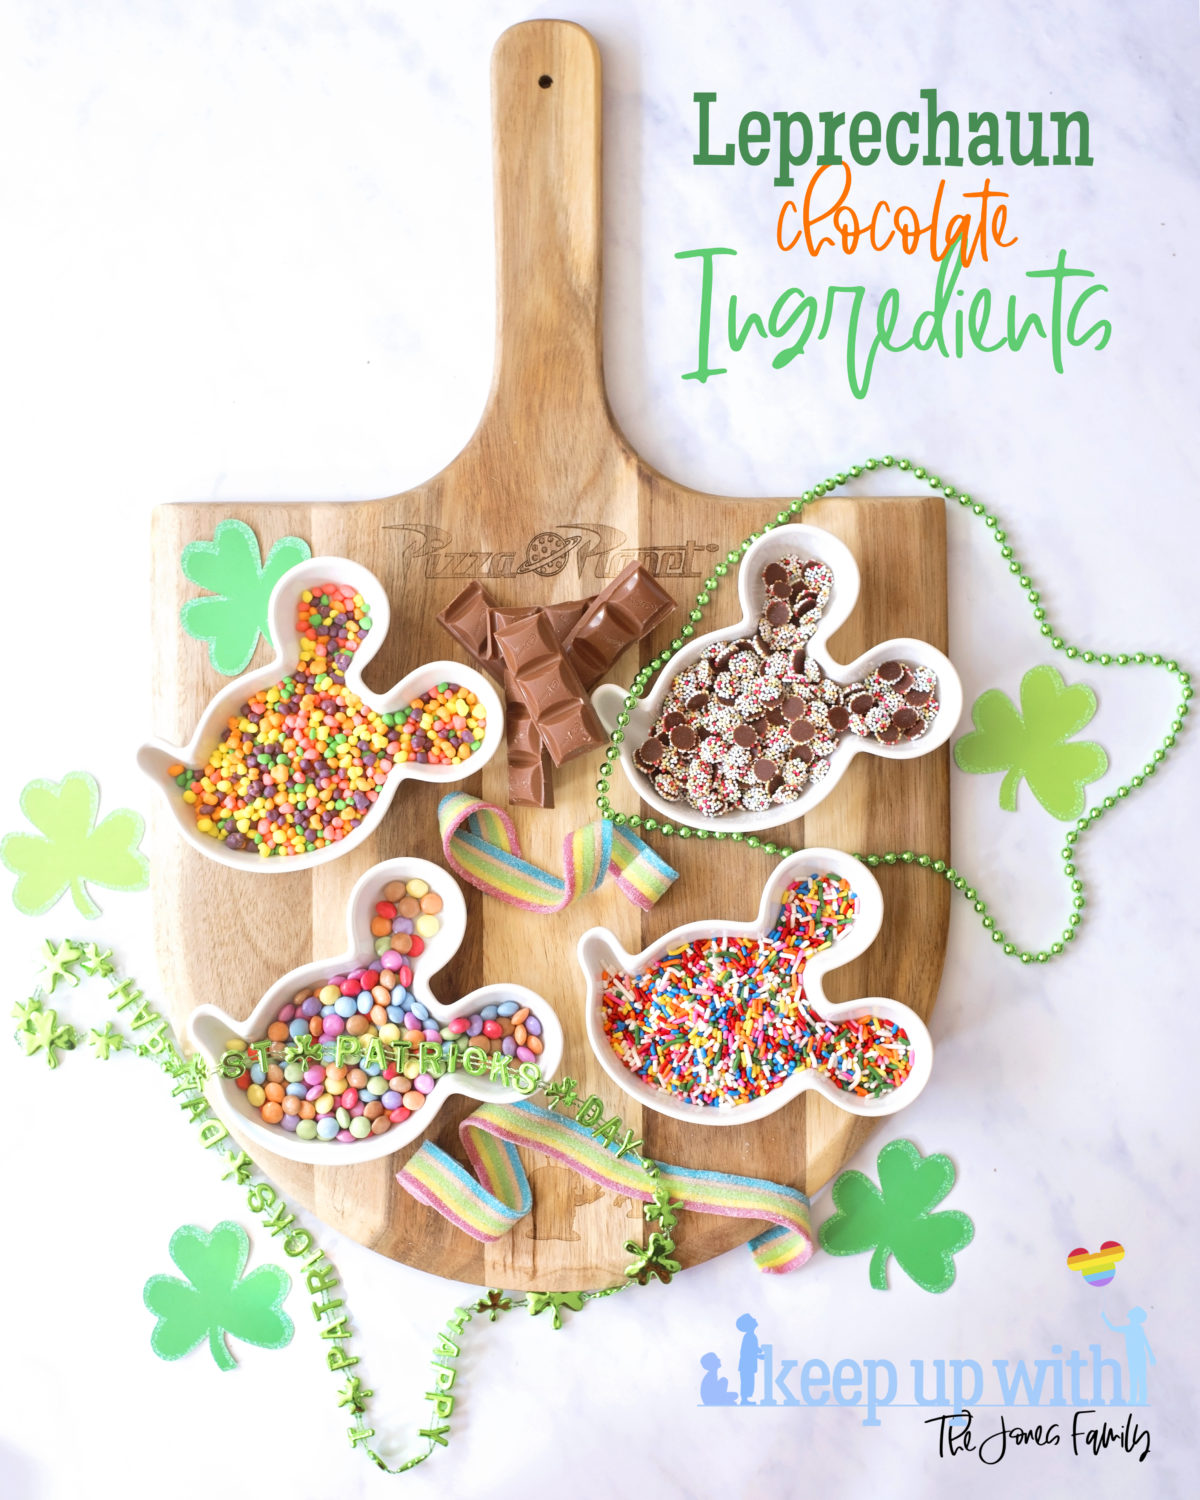 St. Patrick's Day treats Leprechaun Chocolate Buttons tutorial craft